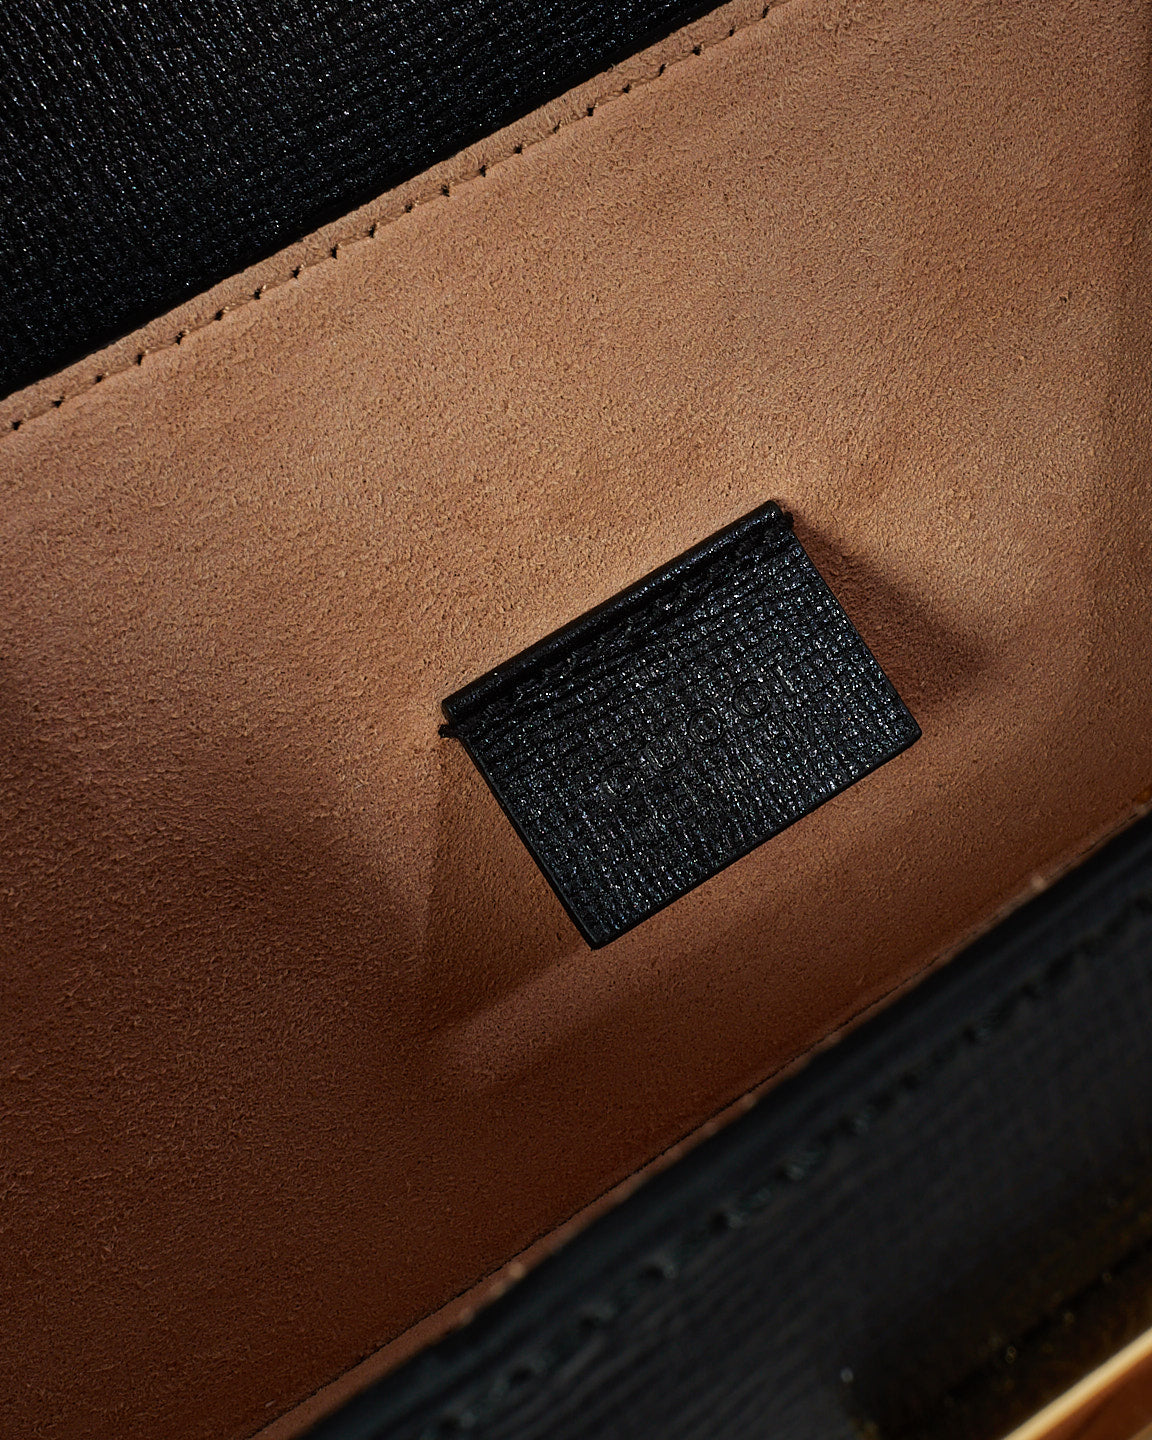 Gucci Black Leather Small Bamboo Padlock Bag